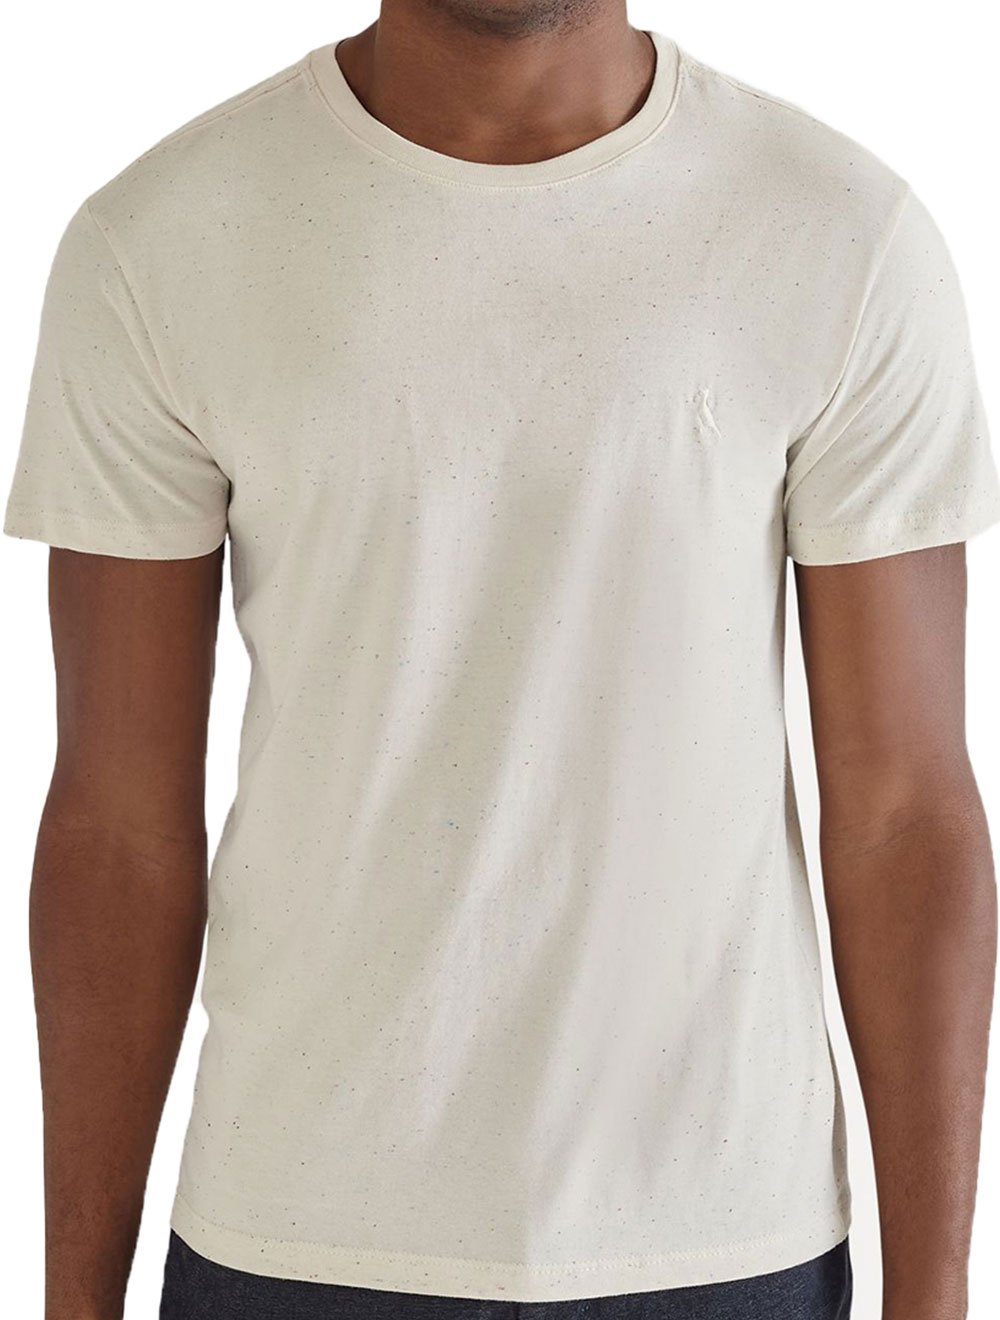 Camiseta Reserva Masculina Fantasia Off-White